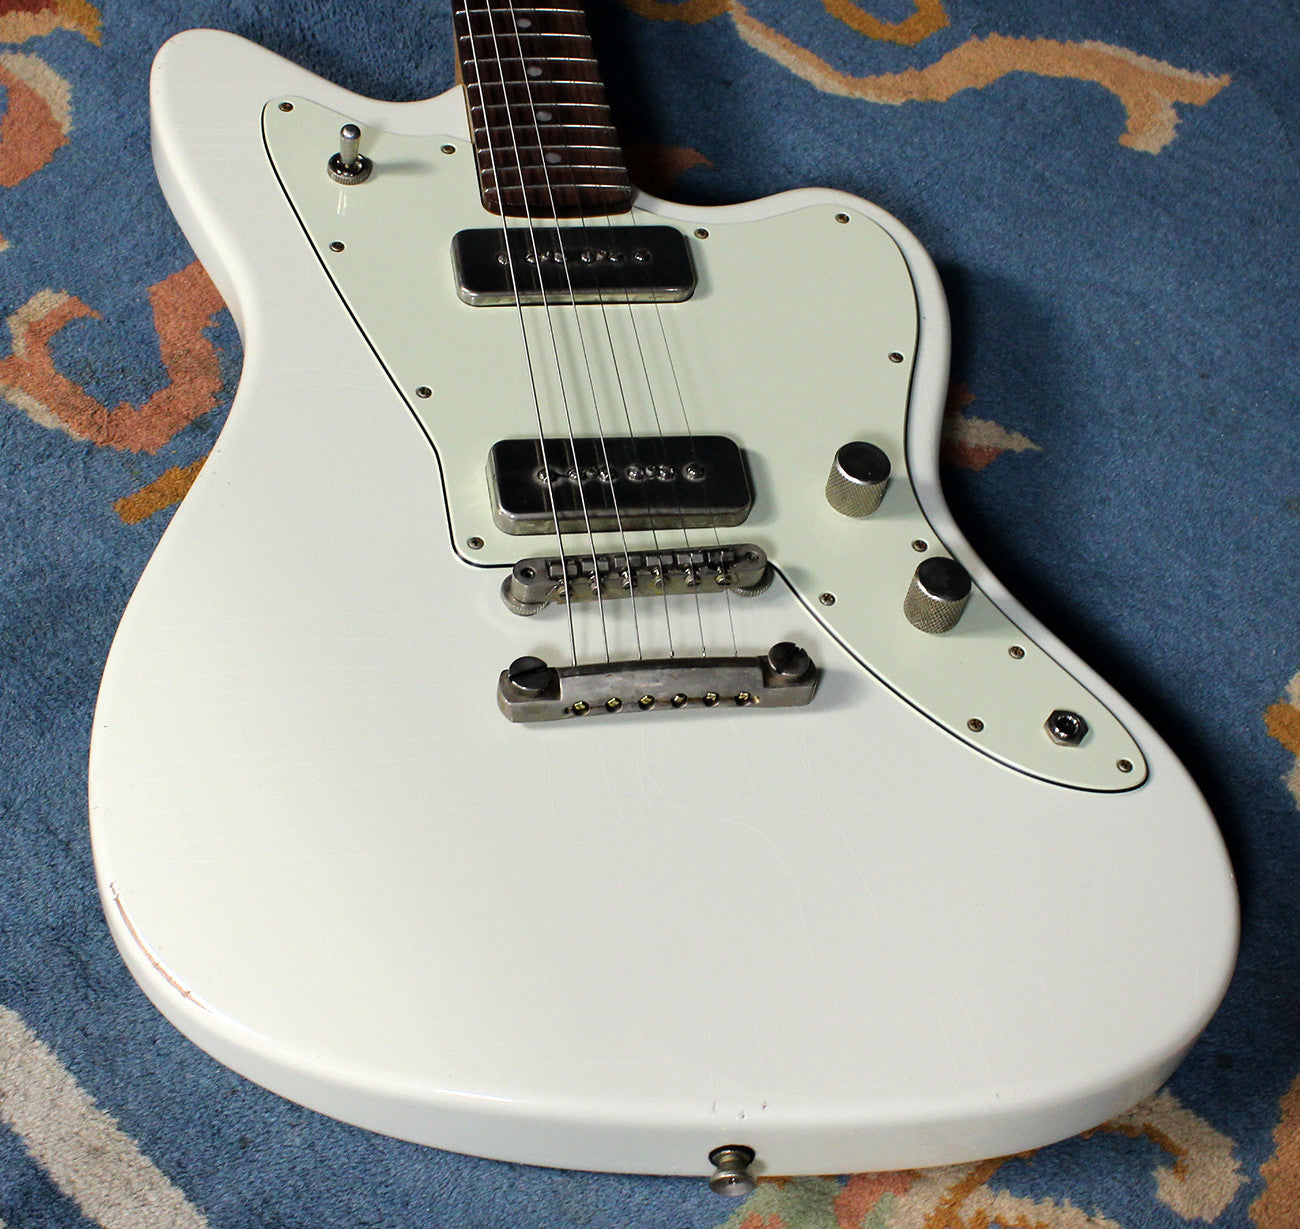 Fano JM6-P90 Standard Guitar in Olympic White | Humbucker Music